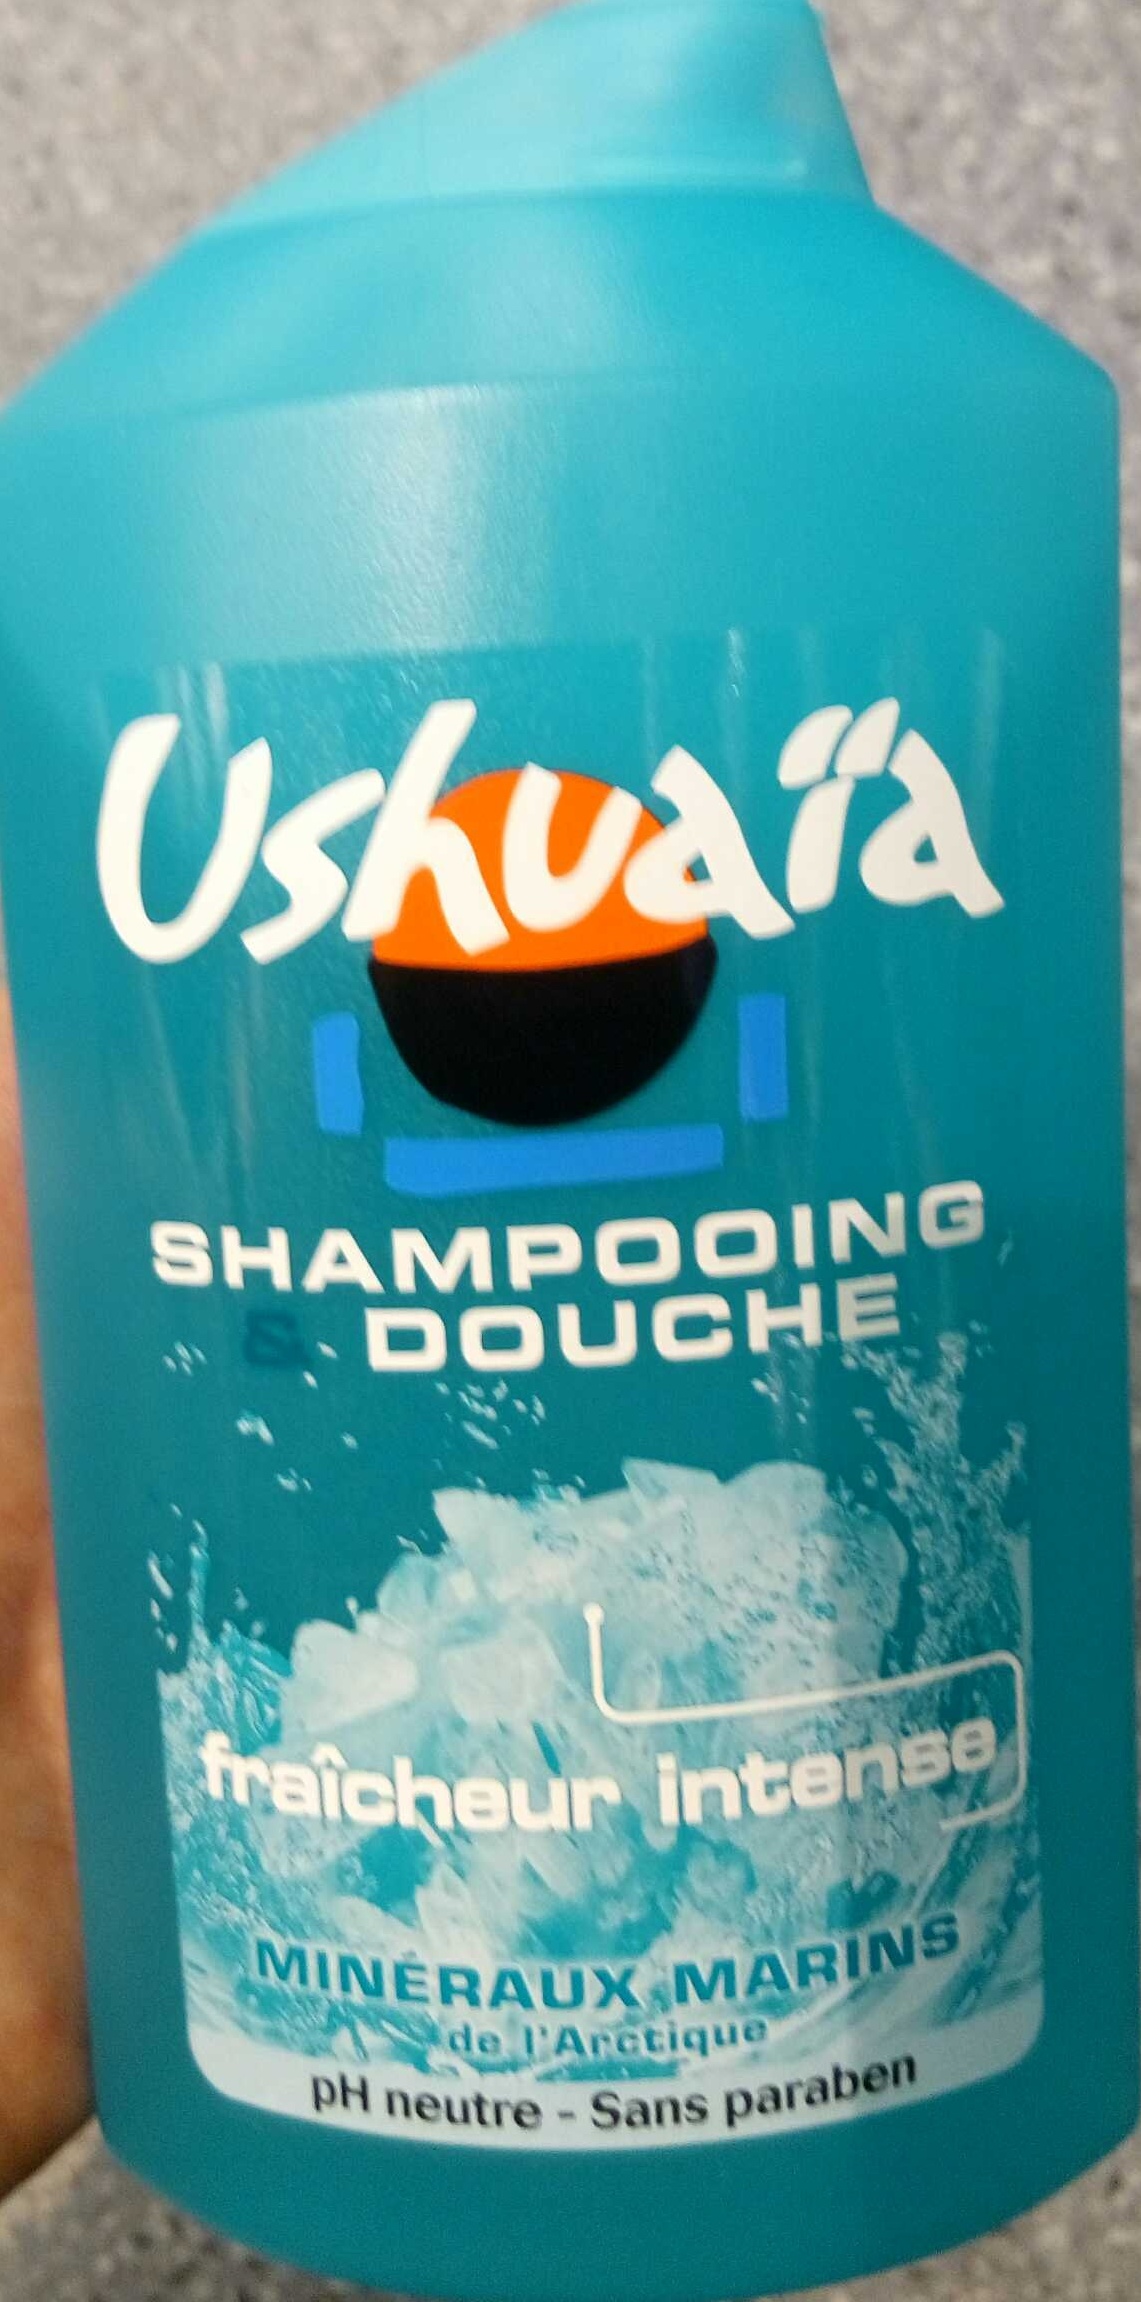 Shampoing douche Fraîcheur intense - Product - fr